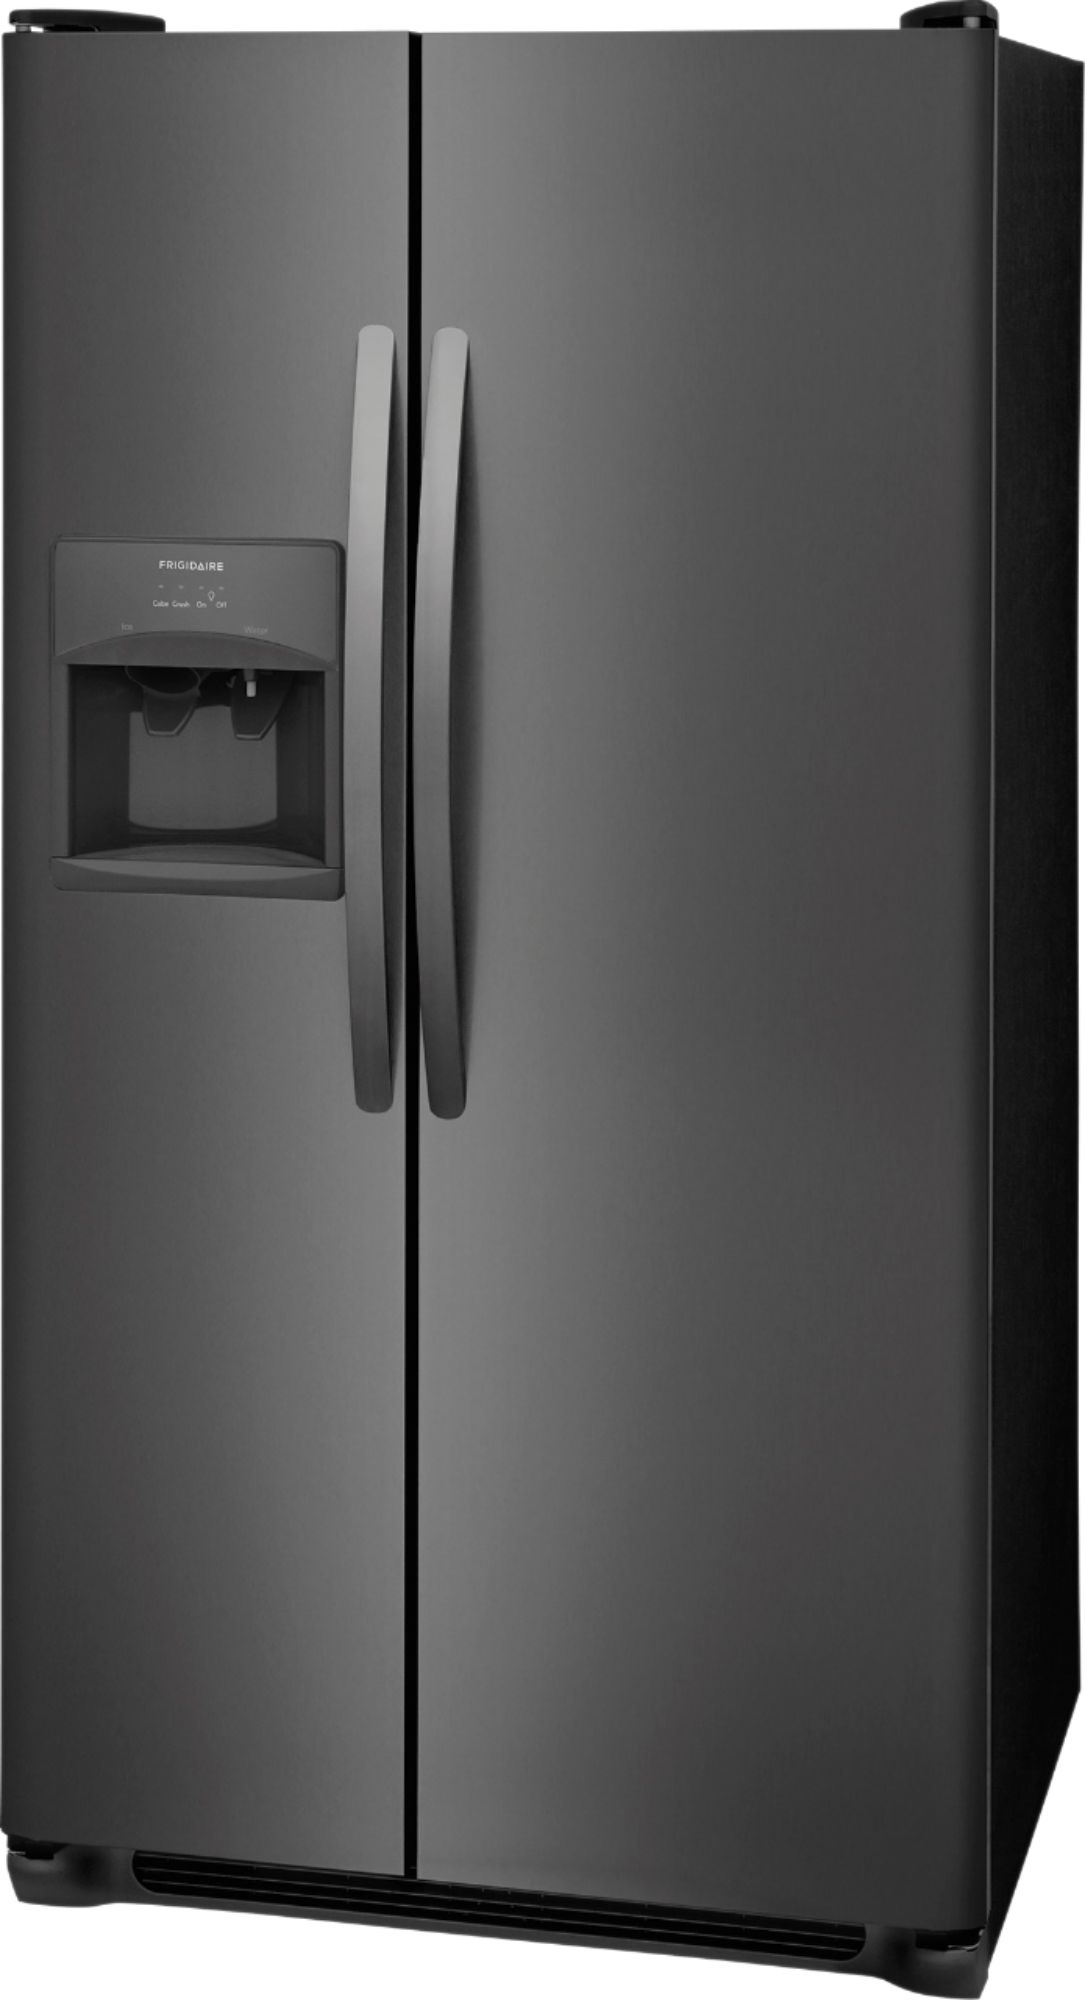 Left View: Frigidaire - 22 Cu. Ft. Refrigerator - Black stainless steel